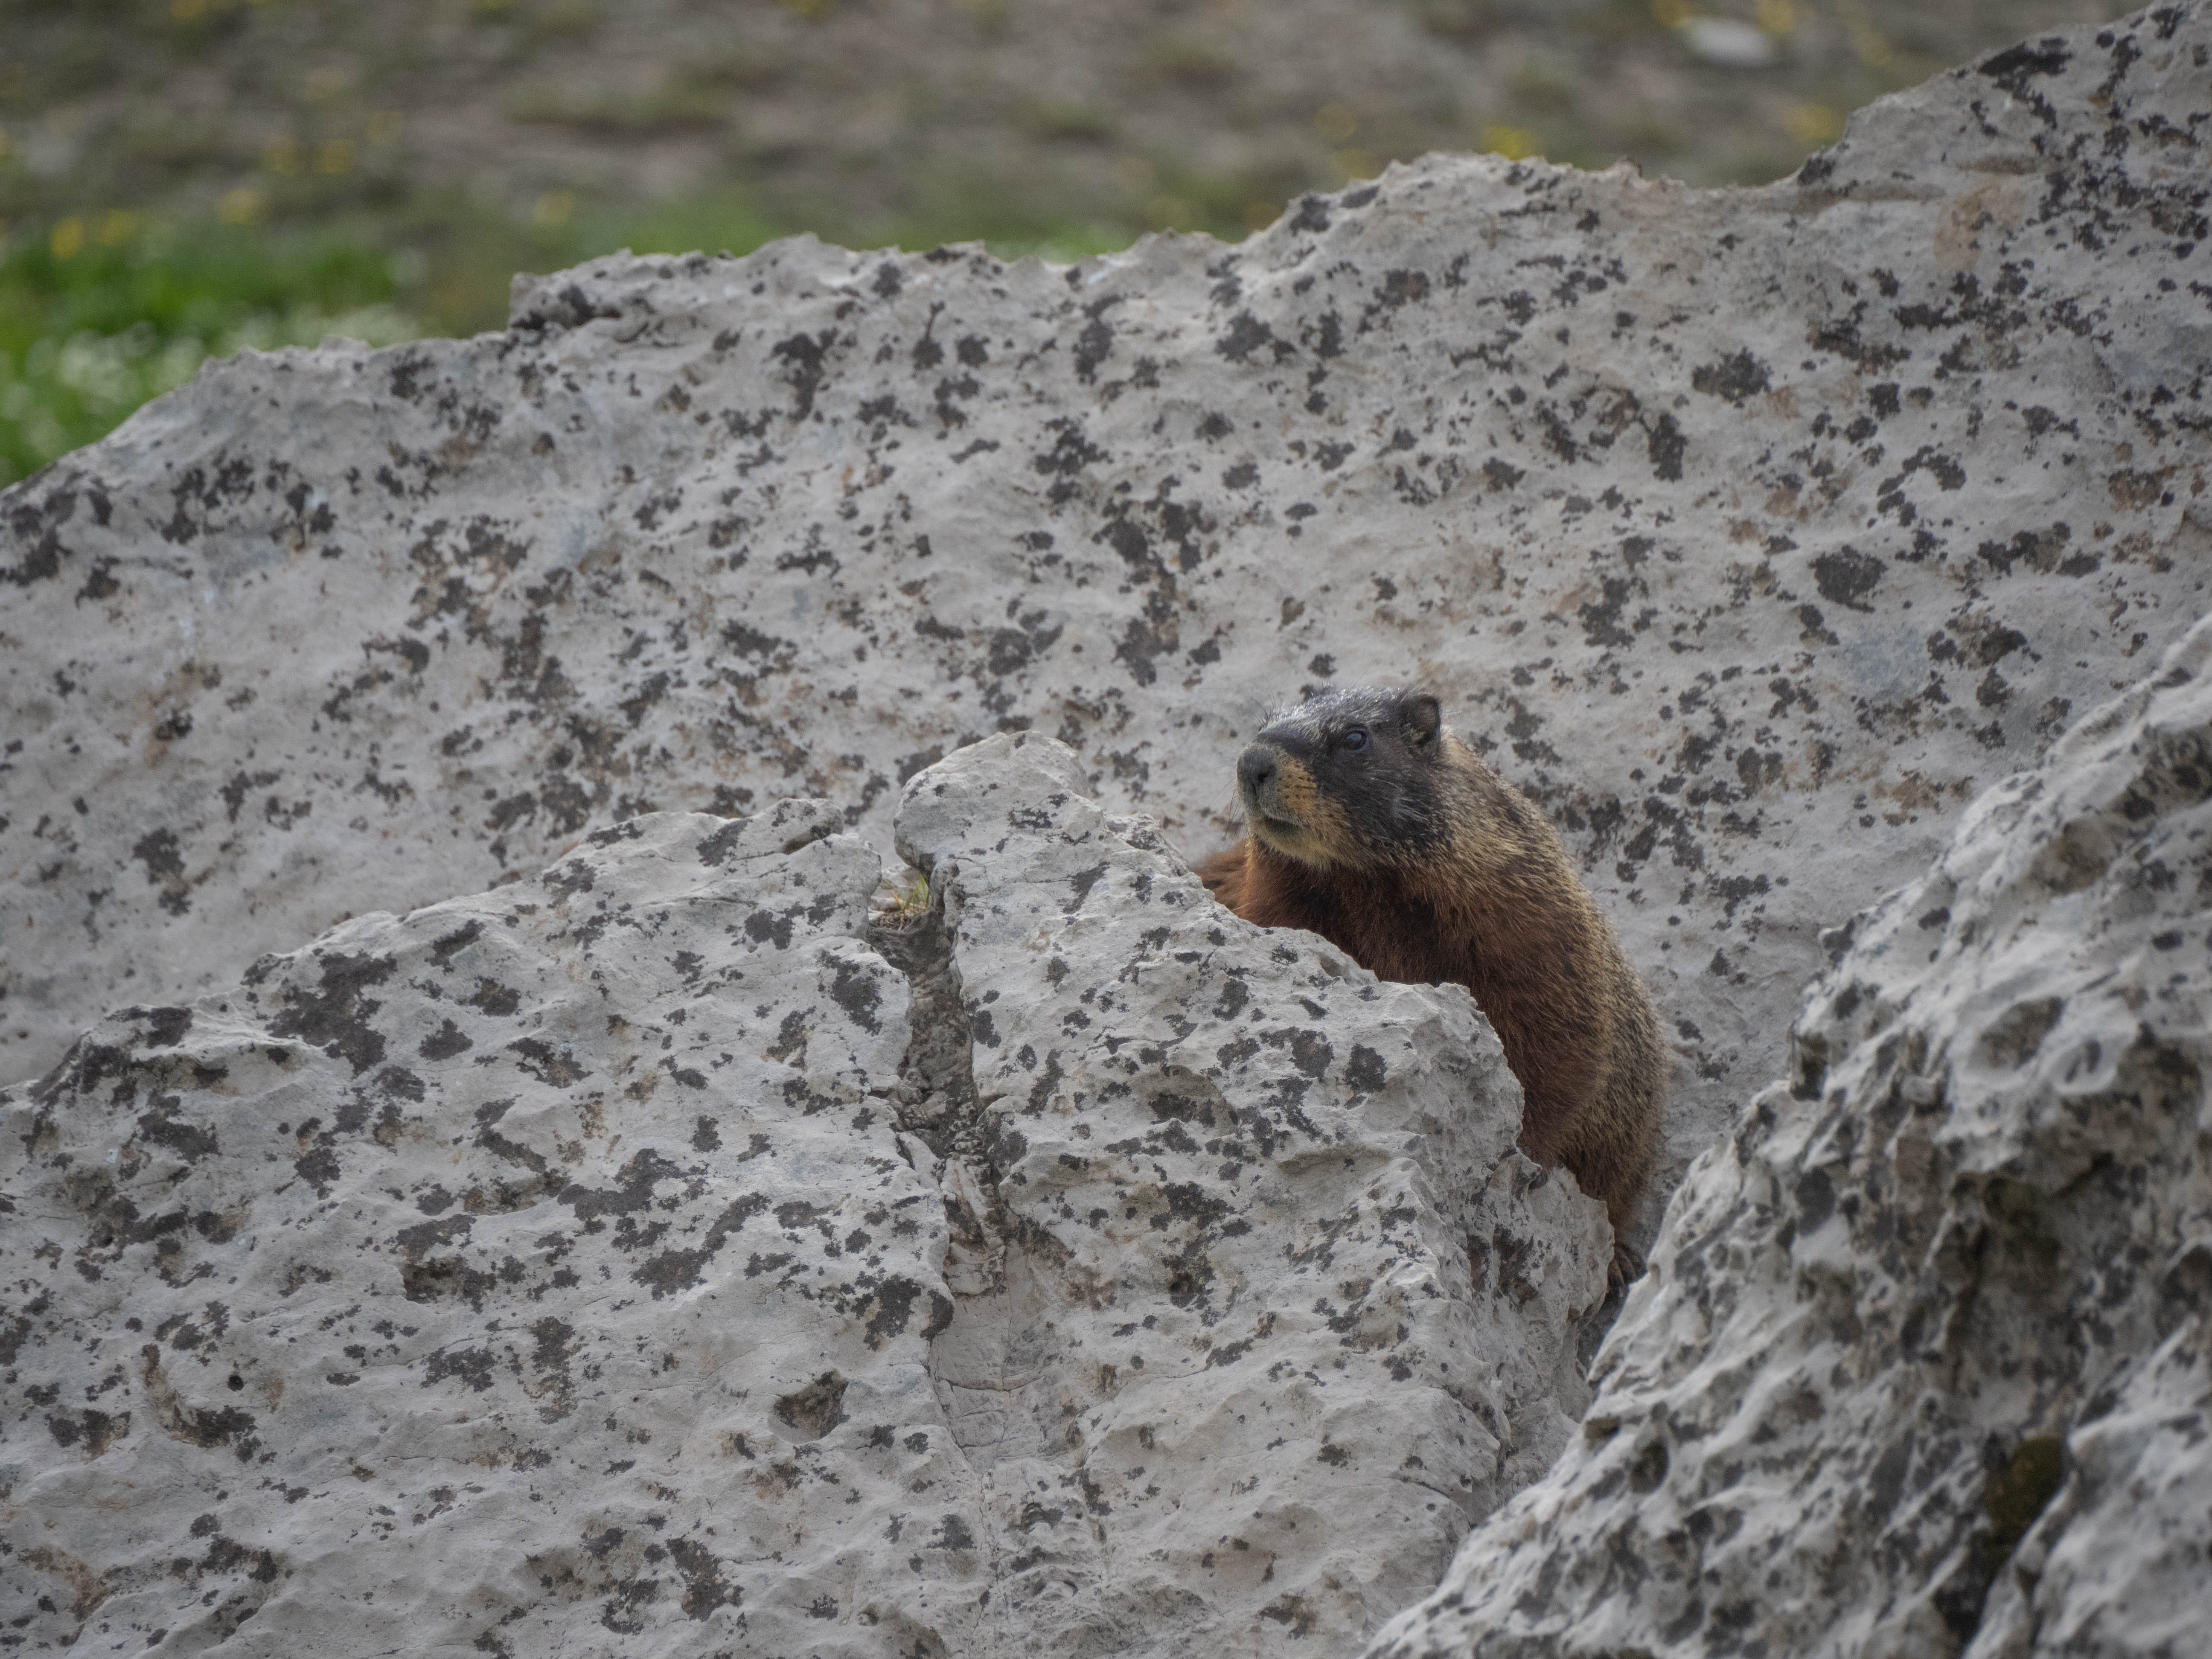 A marmot looking at the camera